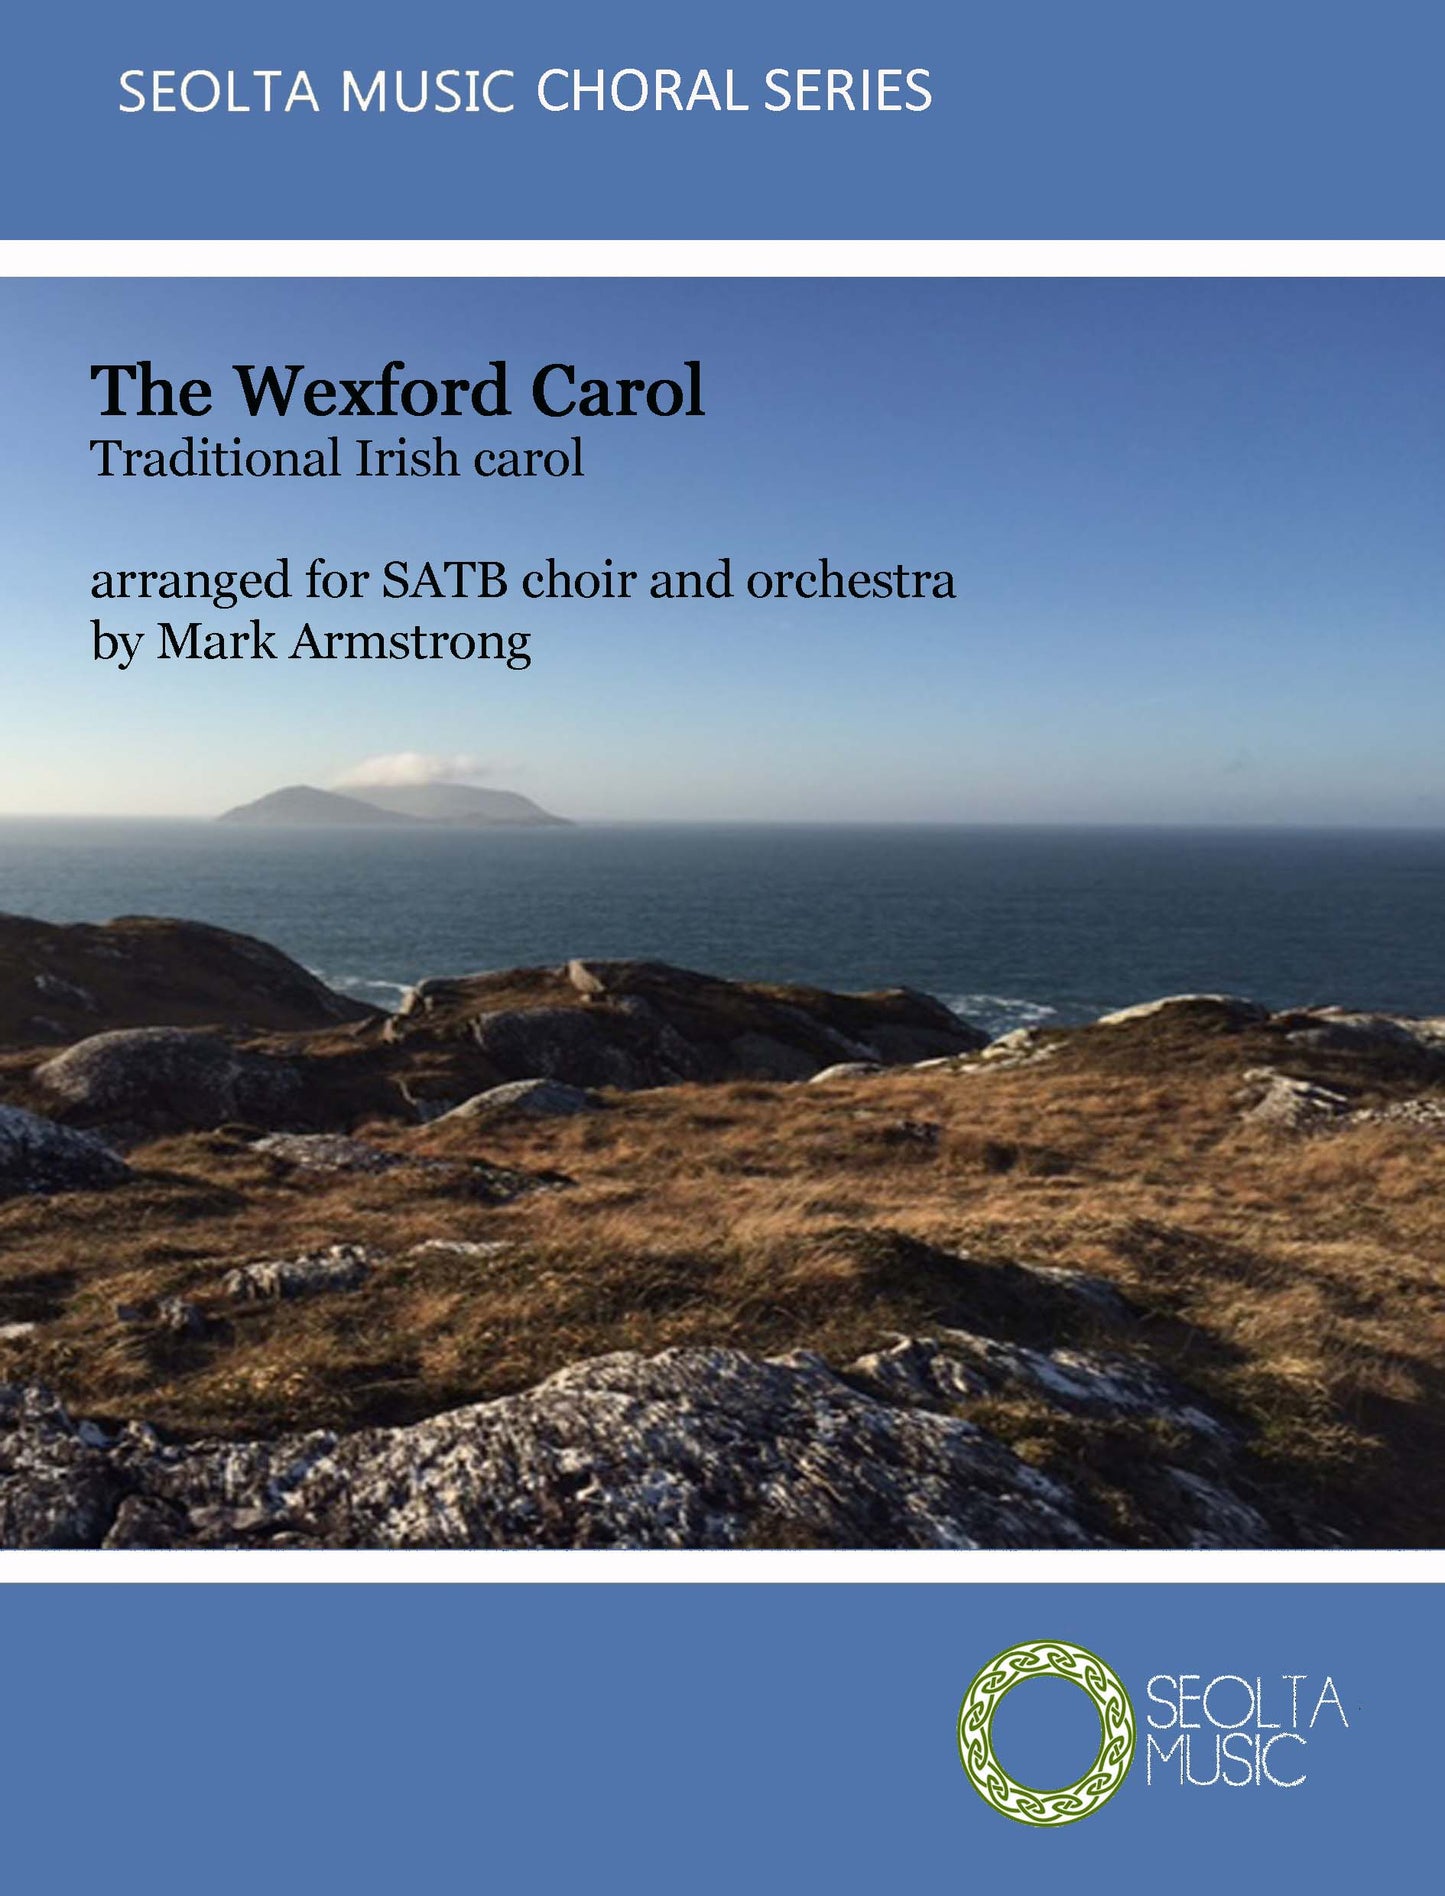 The Wexford Carol - Traditional Irish